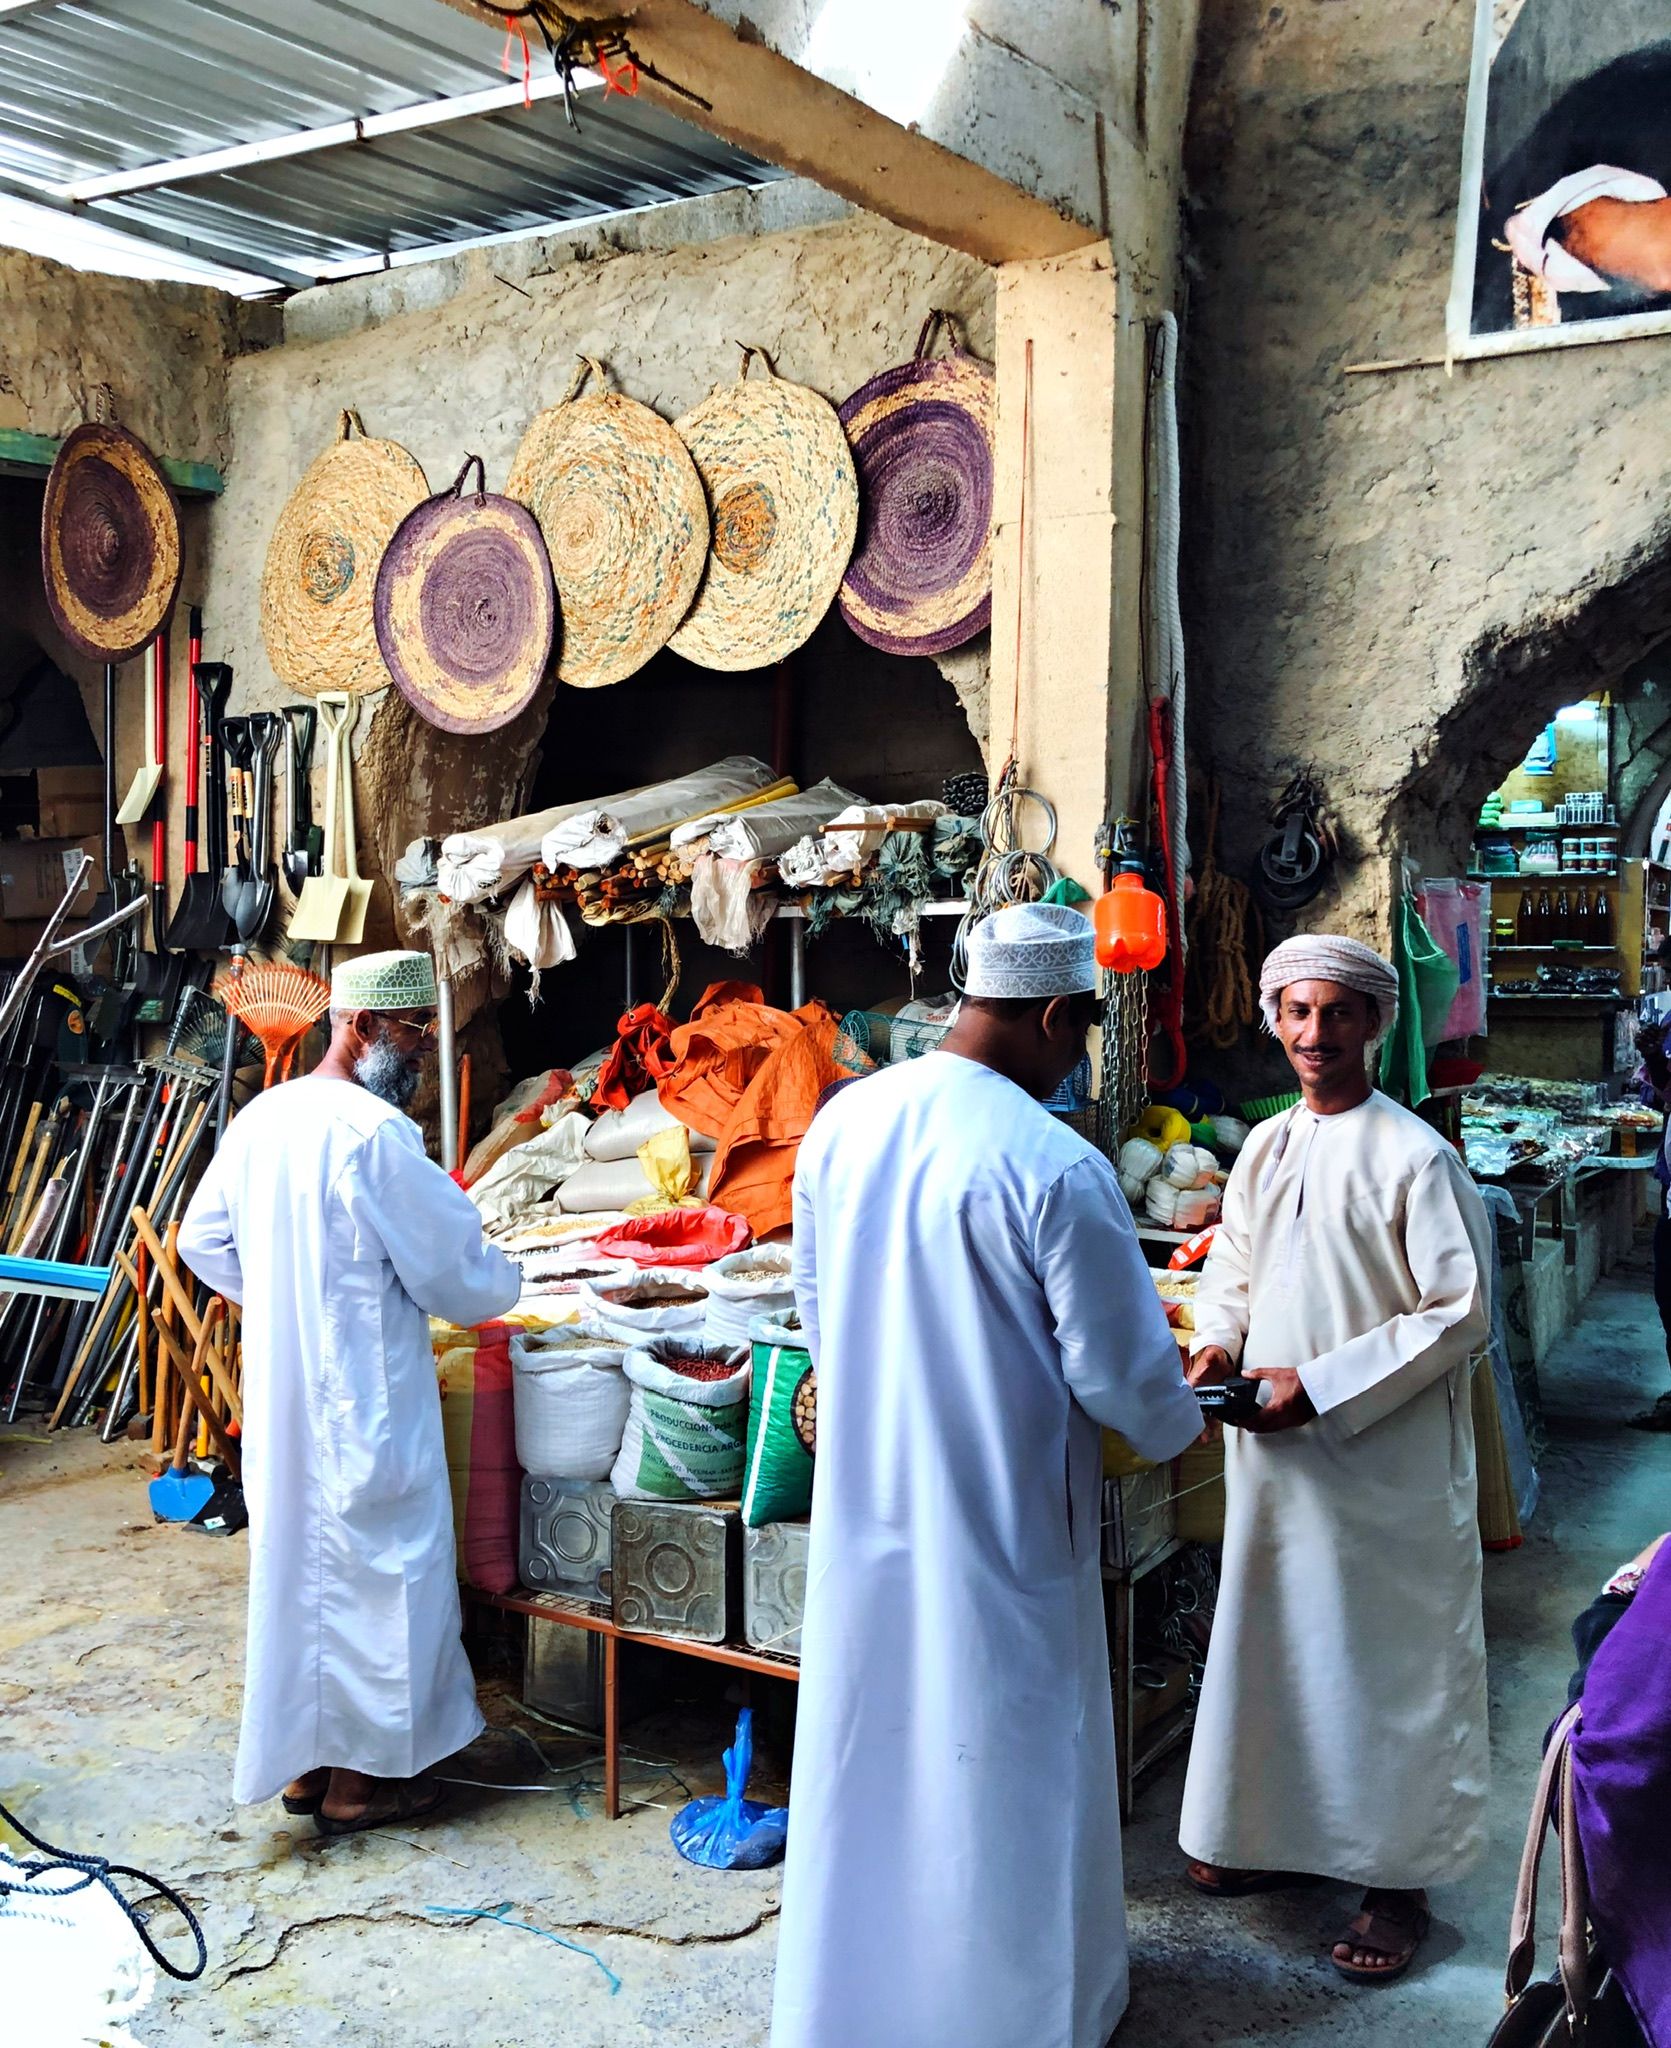 The ancient souq (market) of Nizwa, Oman